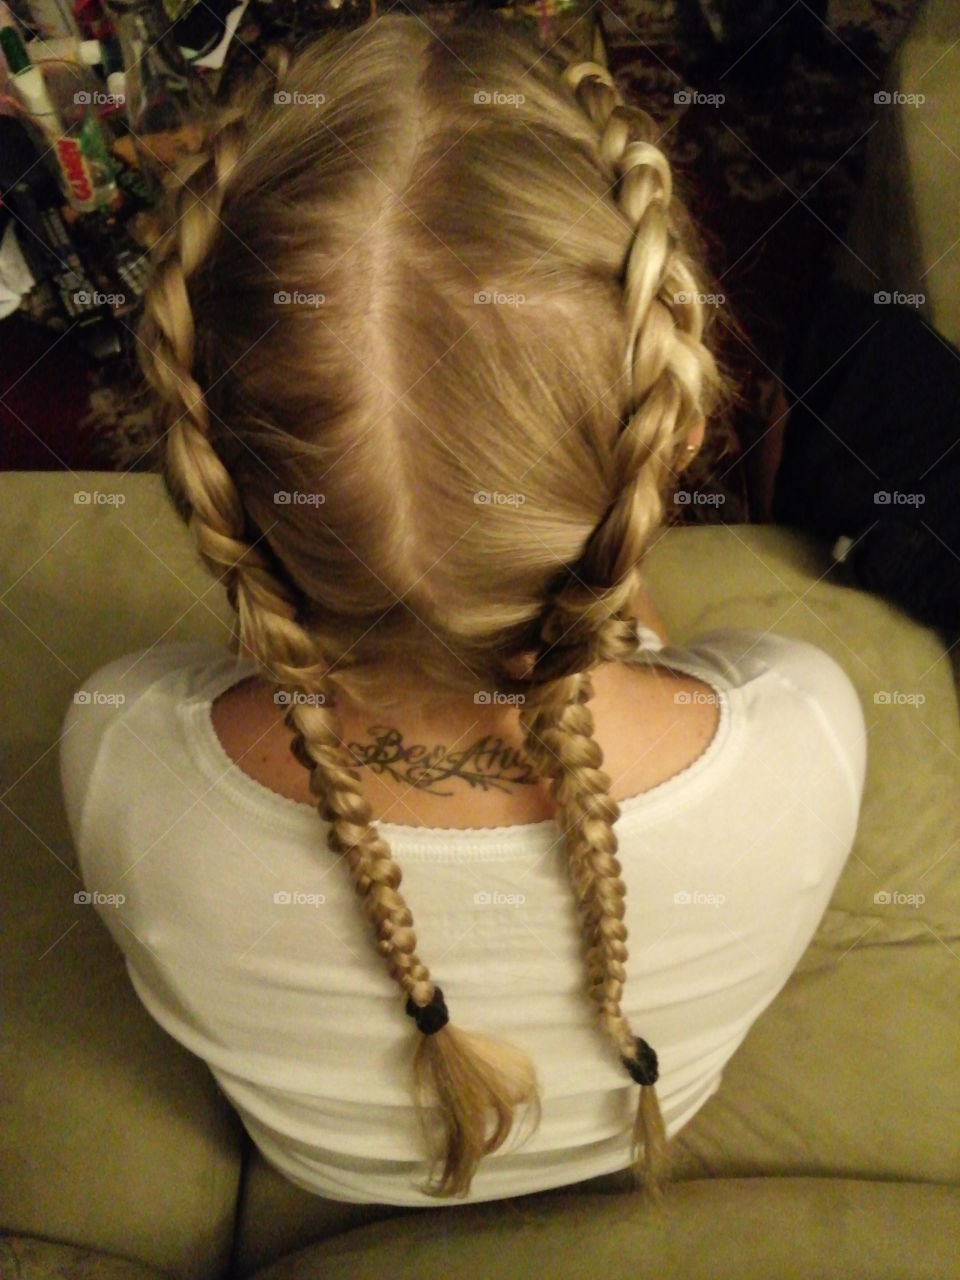 blonde girl hair braids pig tails